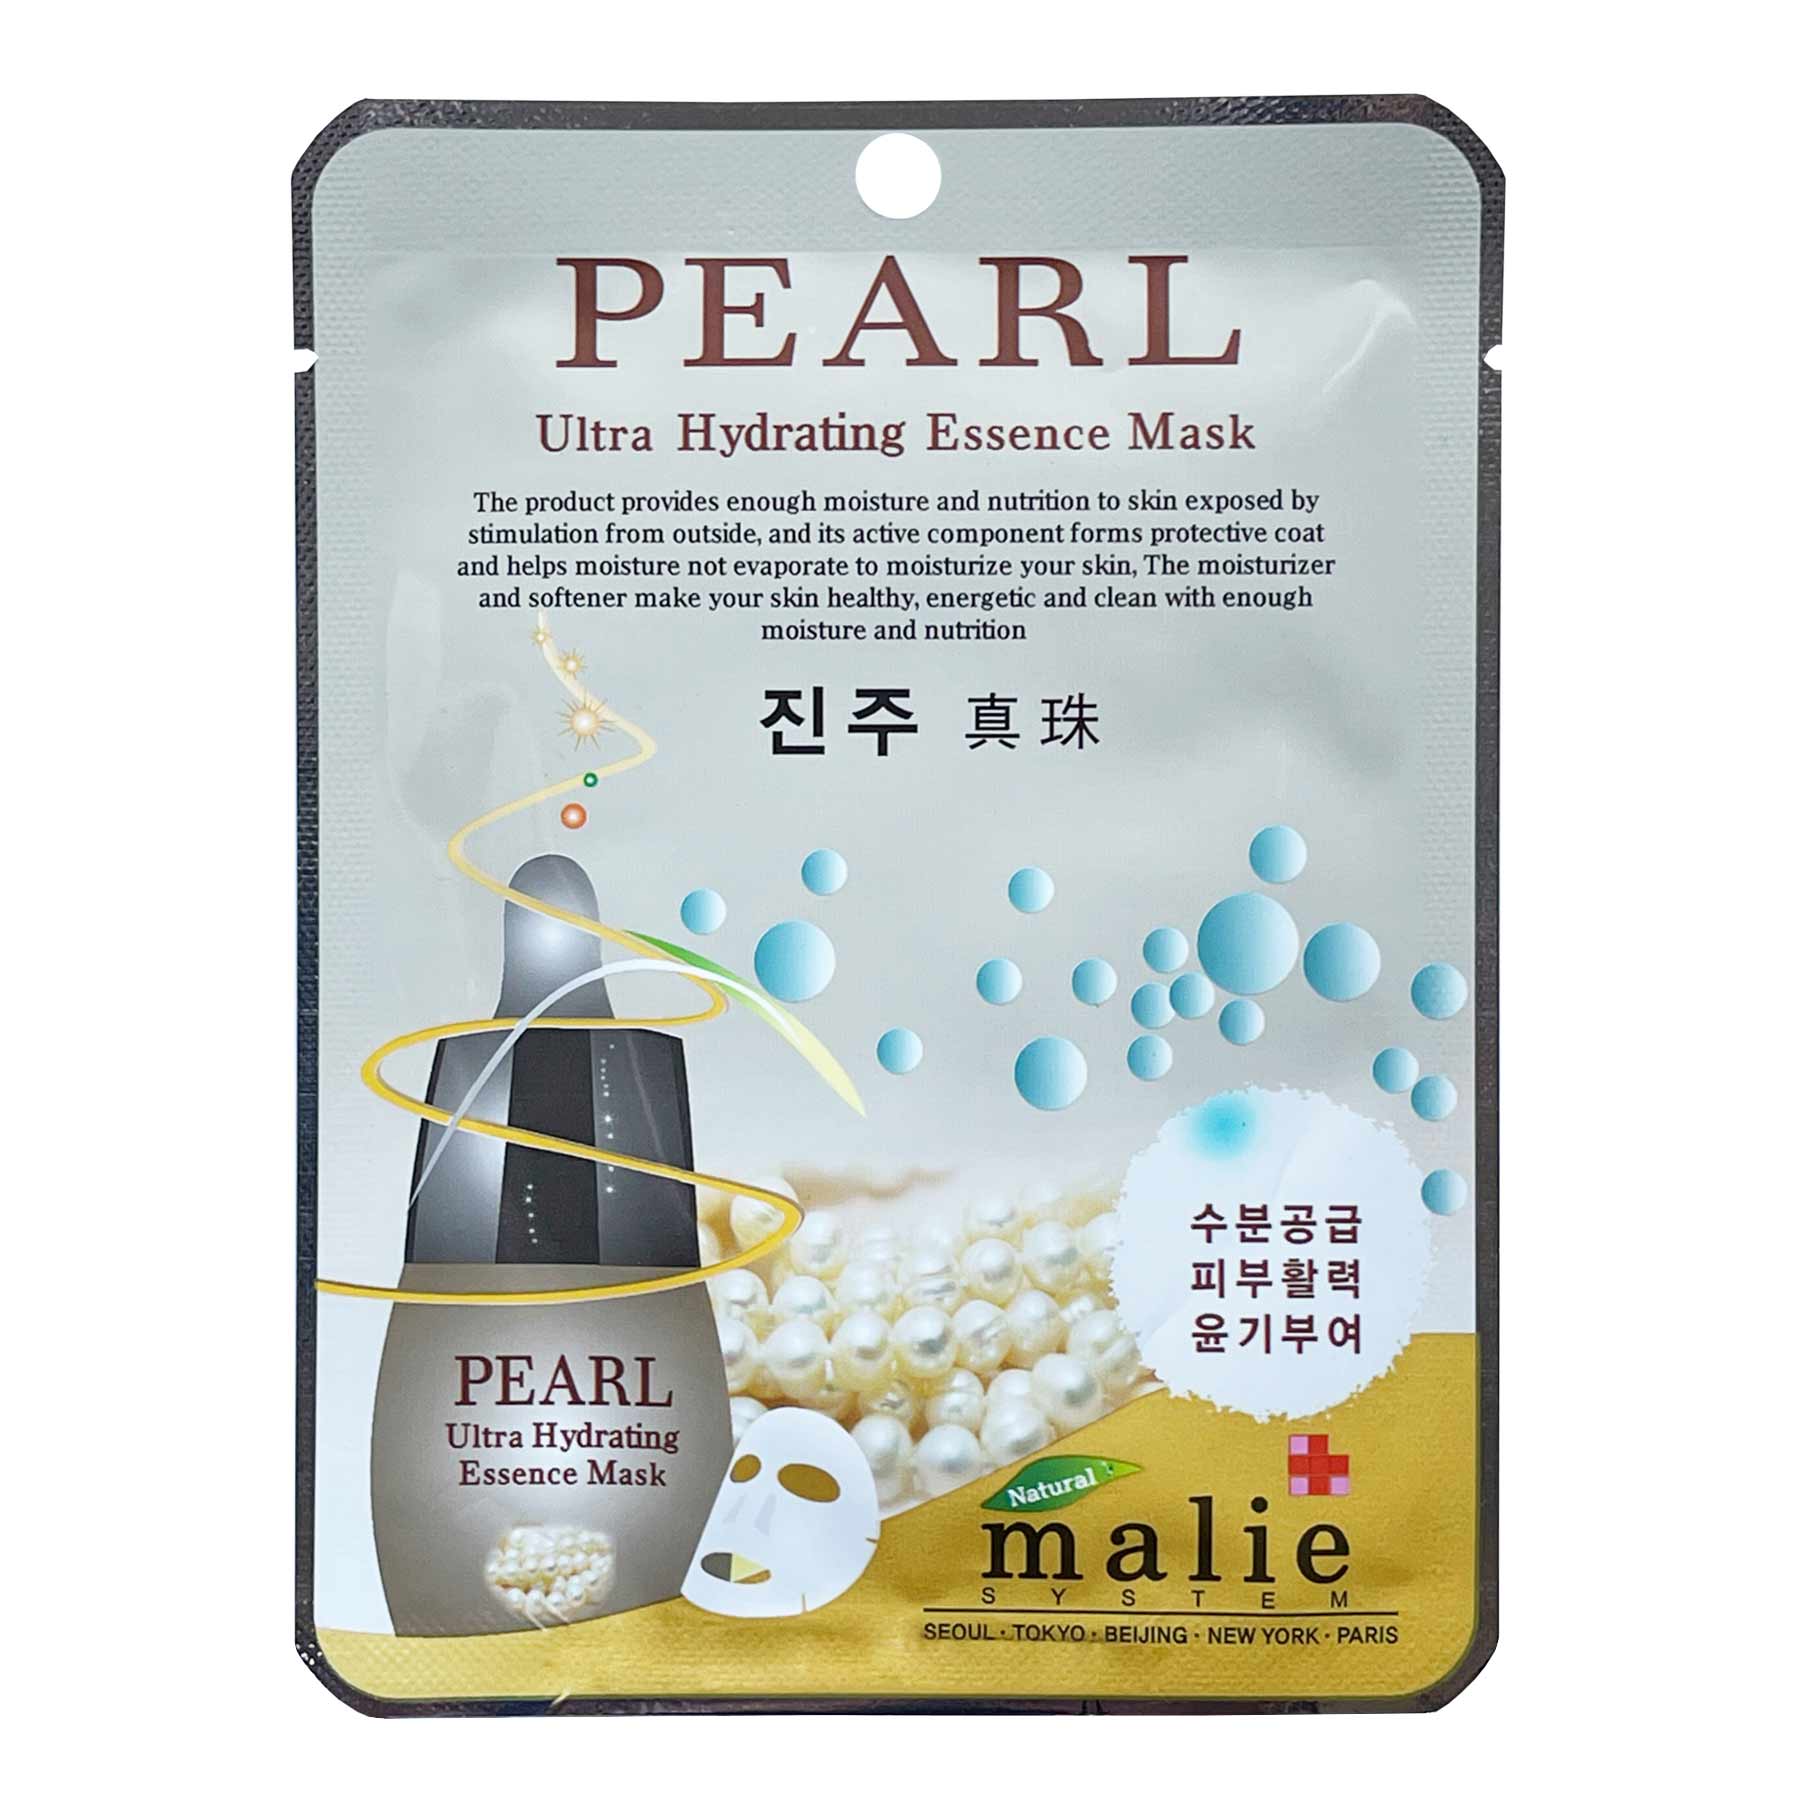 Pearl Ultra Hydrating Essence Mask